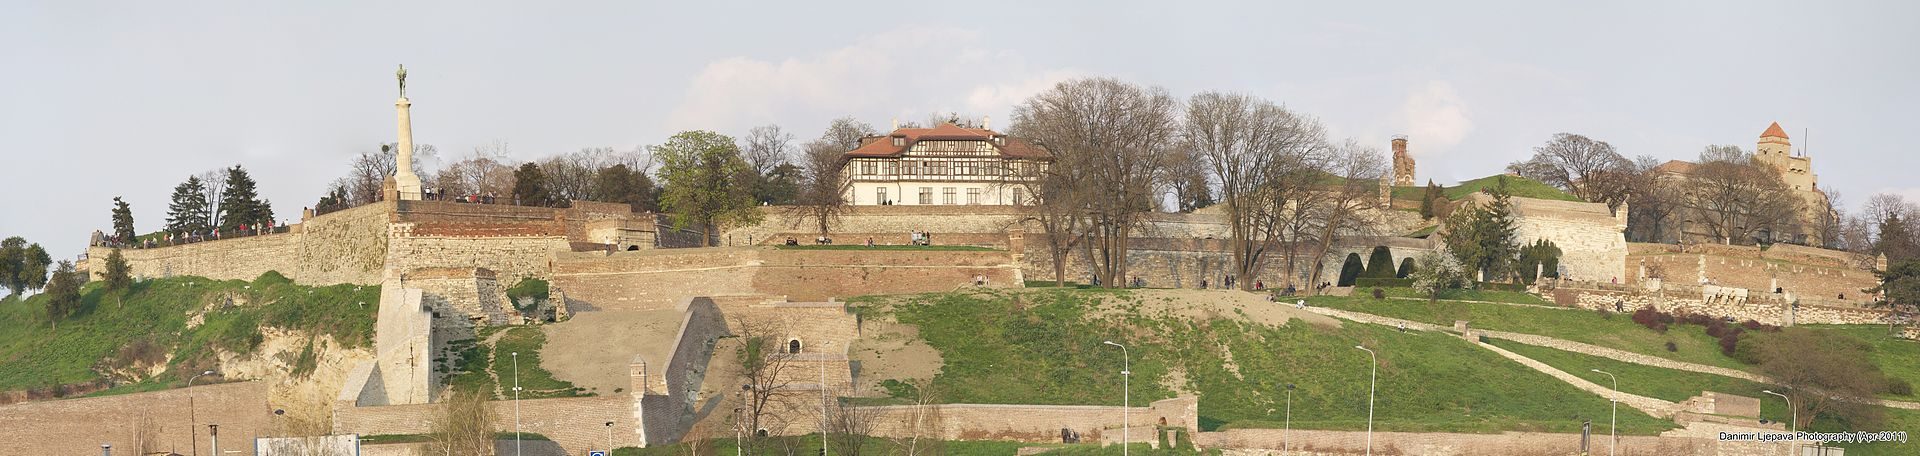 Fortaleza de Belgrado o Kalemegdan, Belgrado, Serbia